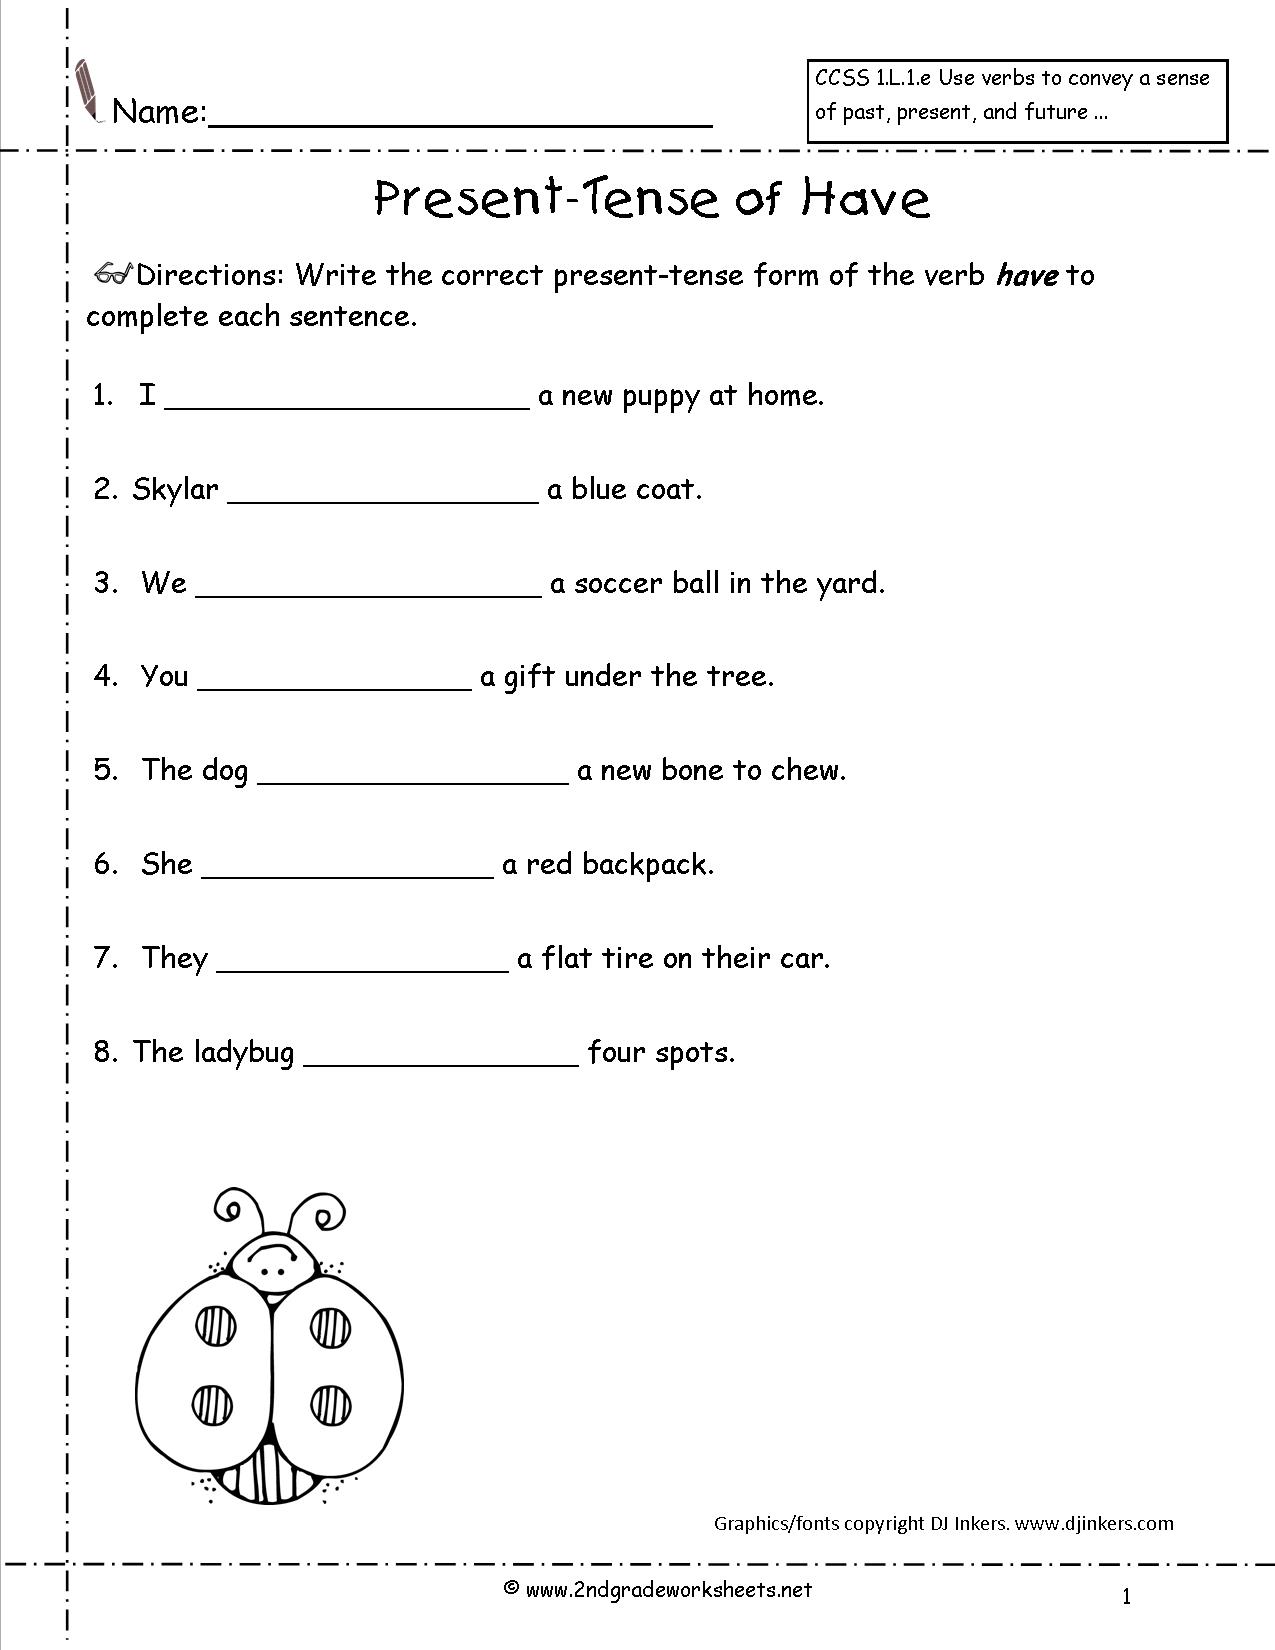 Second Grade Past Tense Verb Worksheets